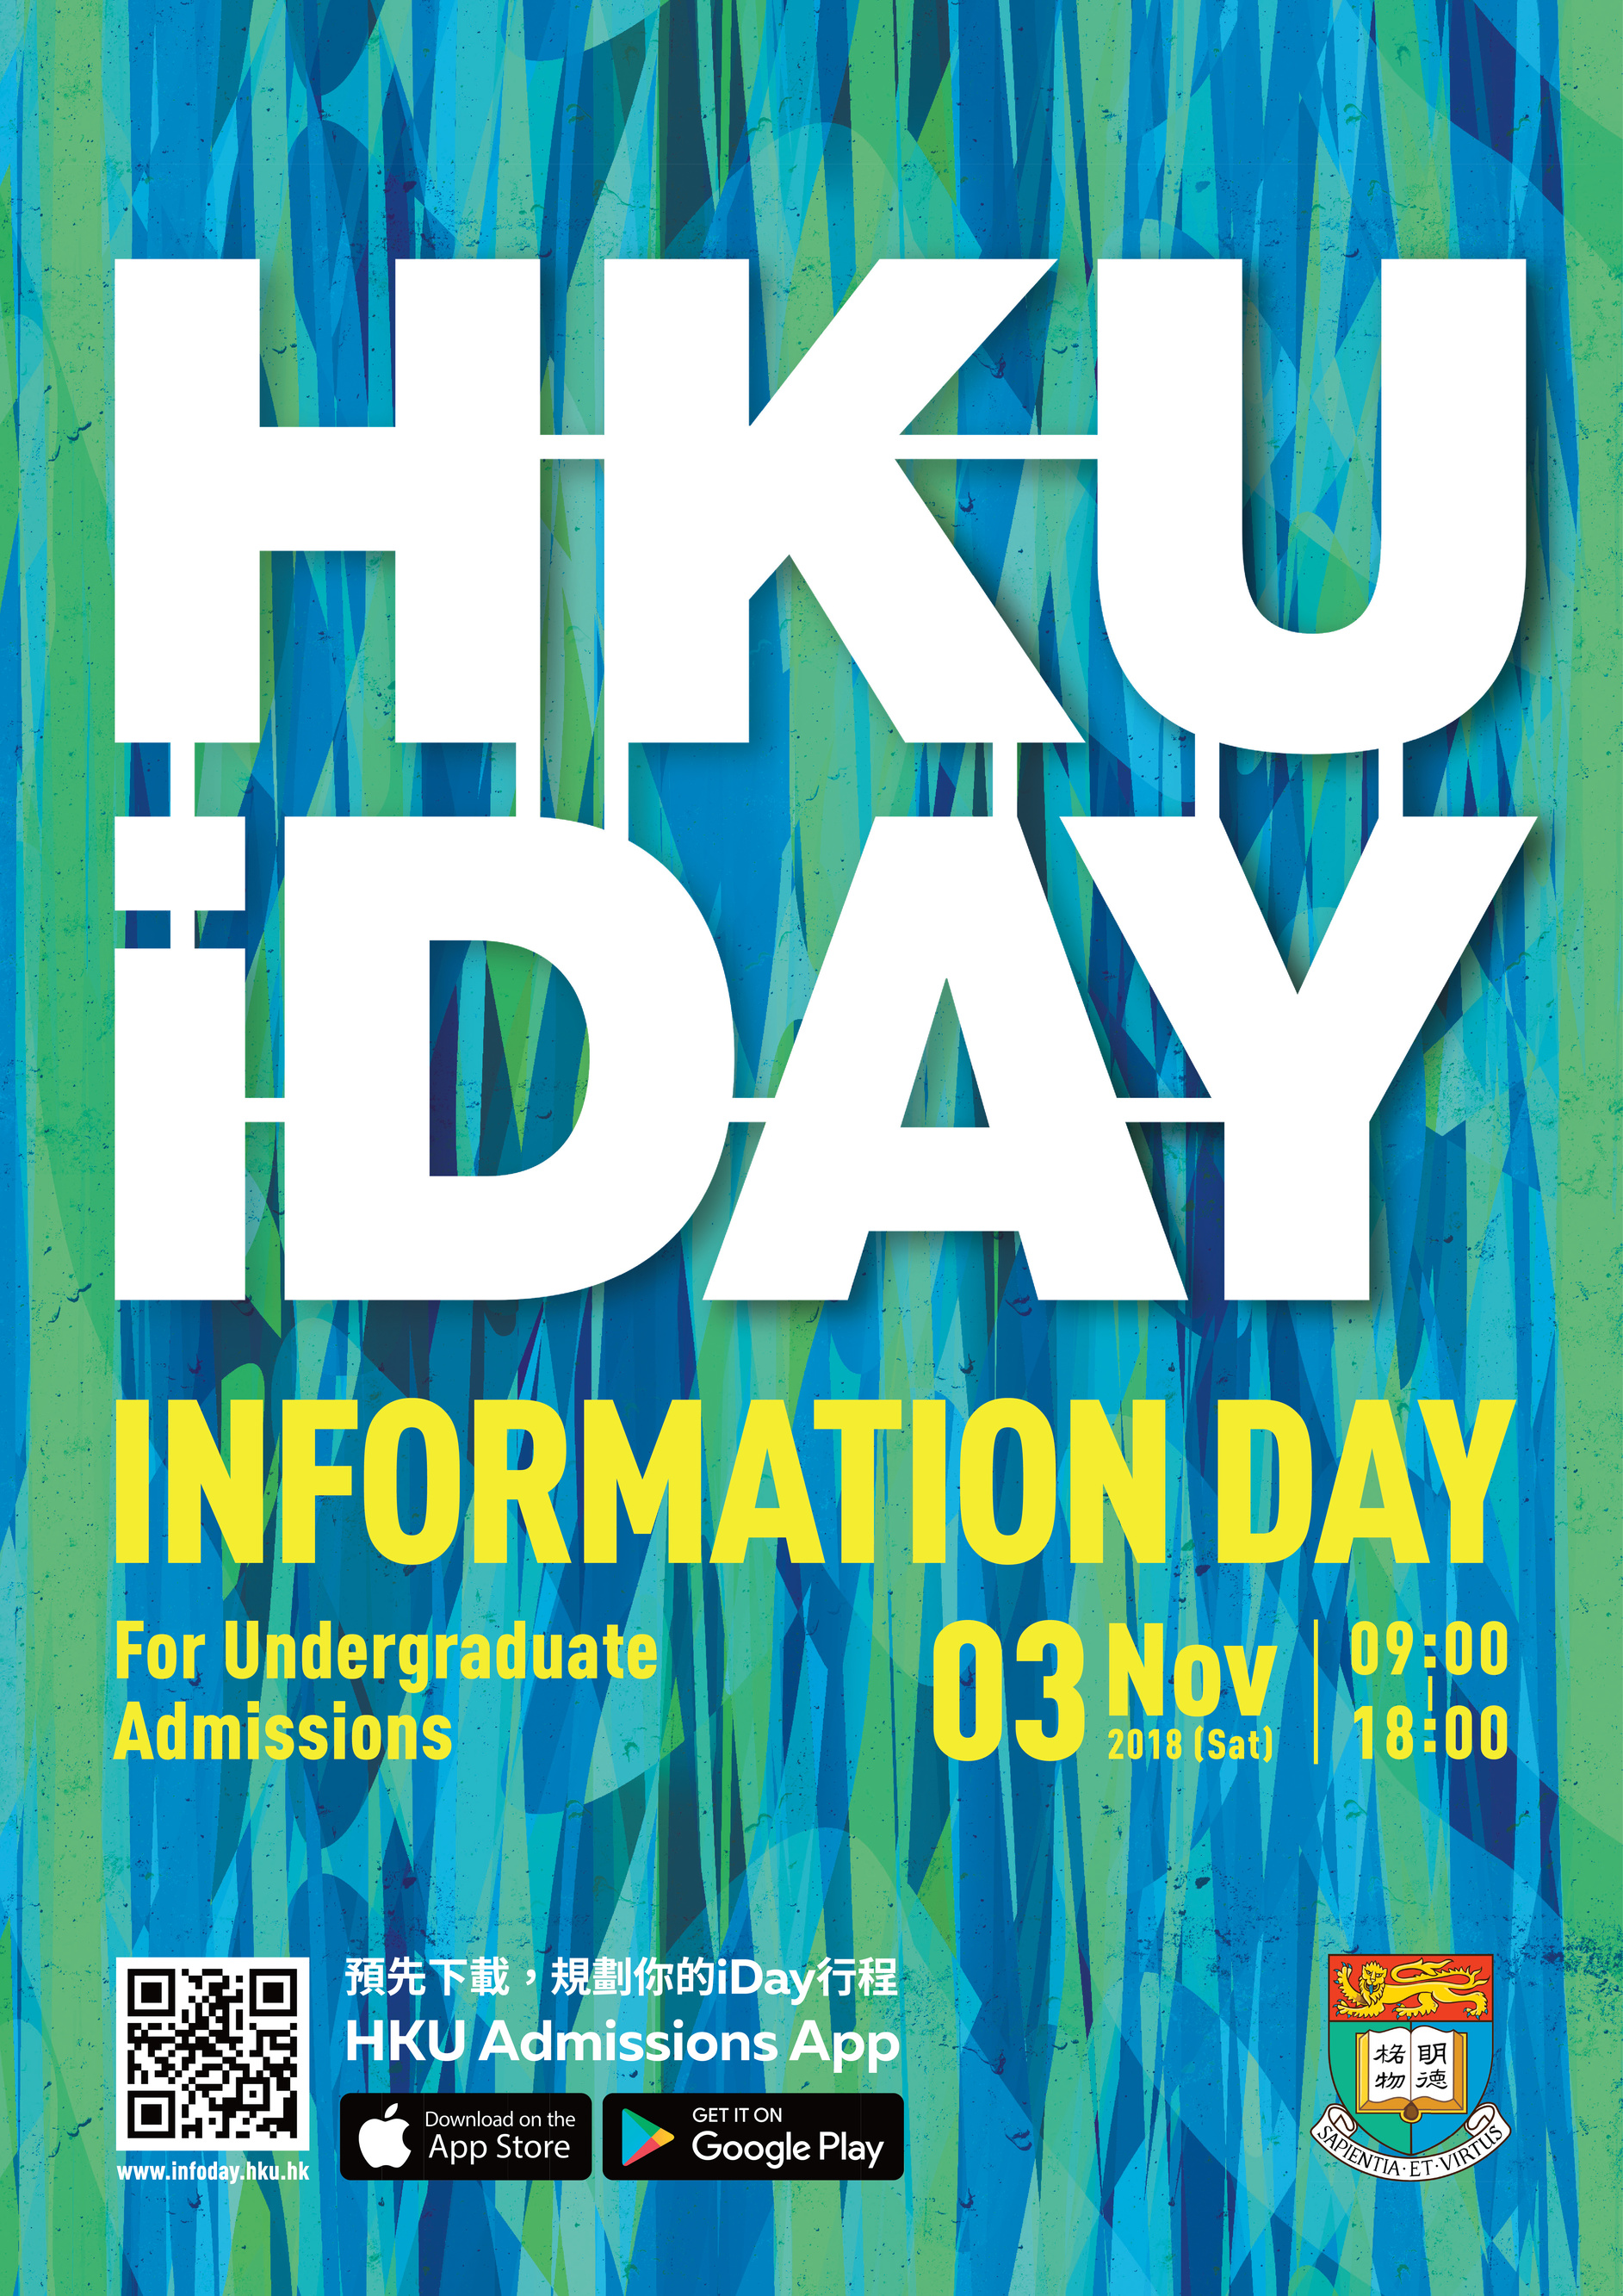 HKU Information Day on Nov 3, 2018